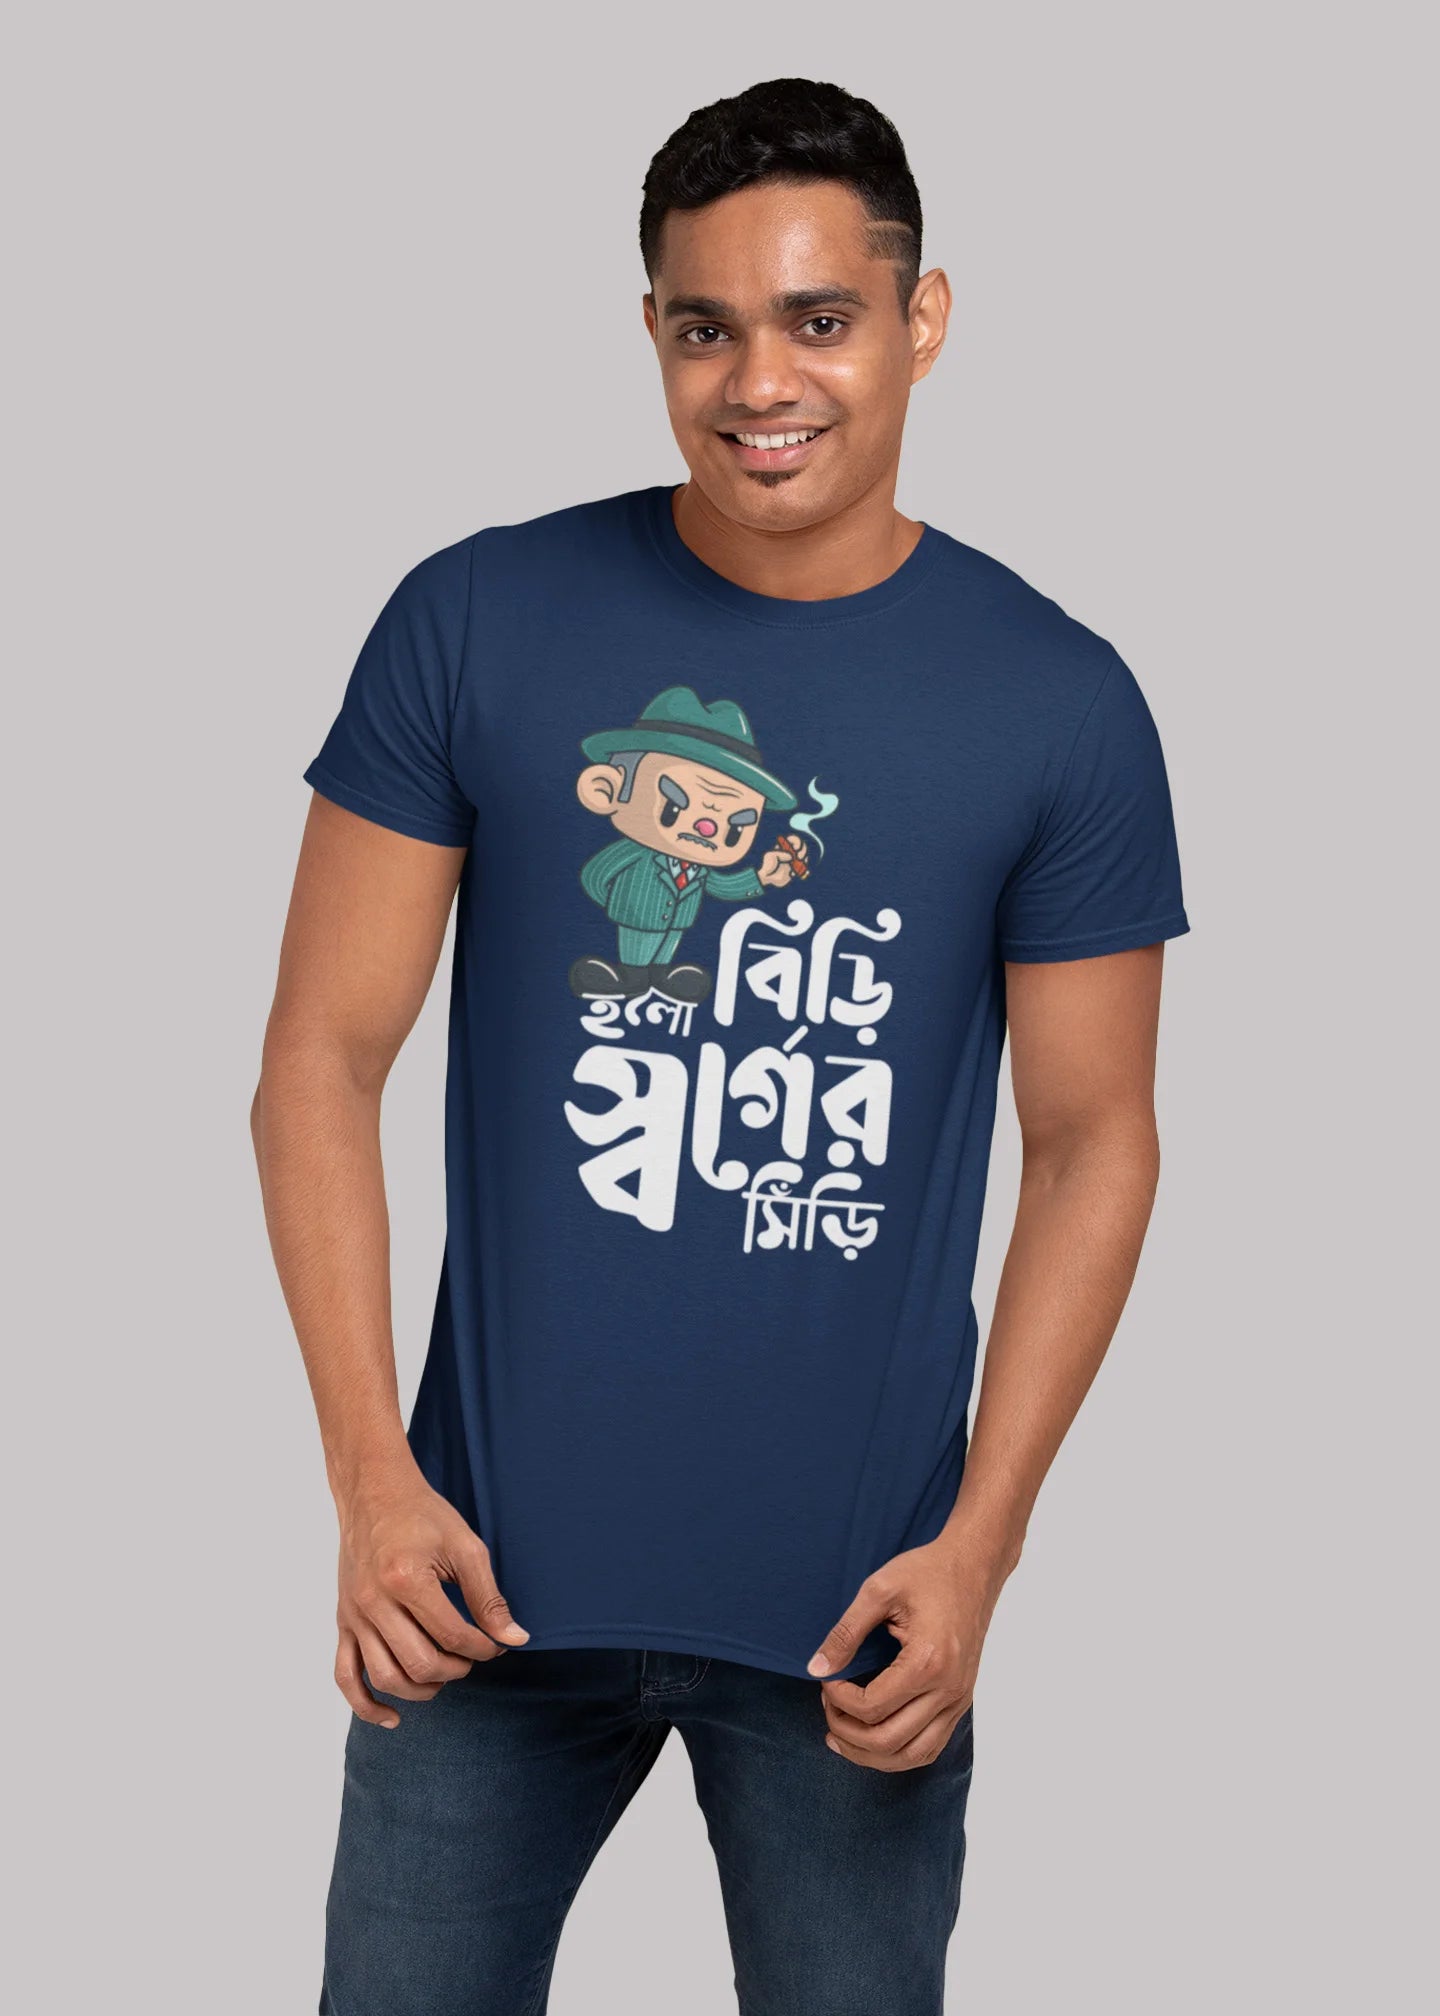 Biri holo swarger siri bengali Printed Half Sleeve Premium Cotton T-shirt